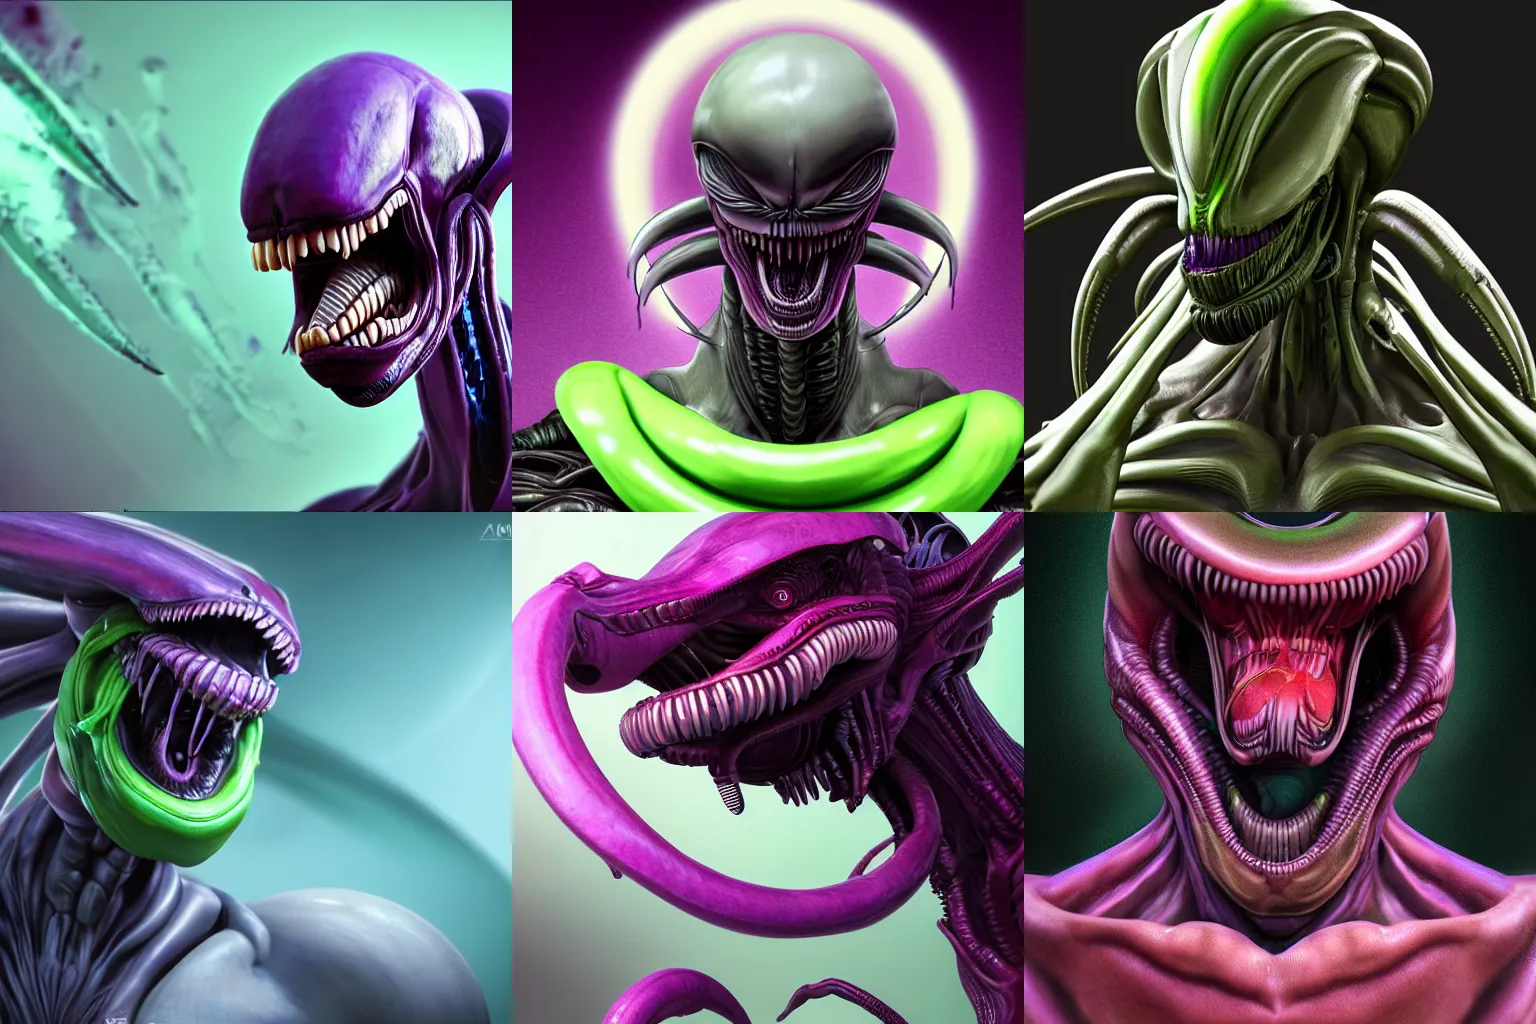 Prompt: Mid shot portrait a xenomorph alien, Manga, Anime, hyper realistic render, hyper detailed, octane render, green, purple, dark